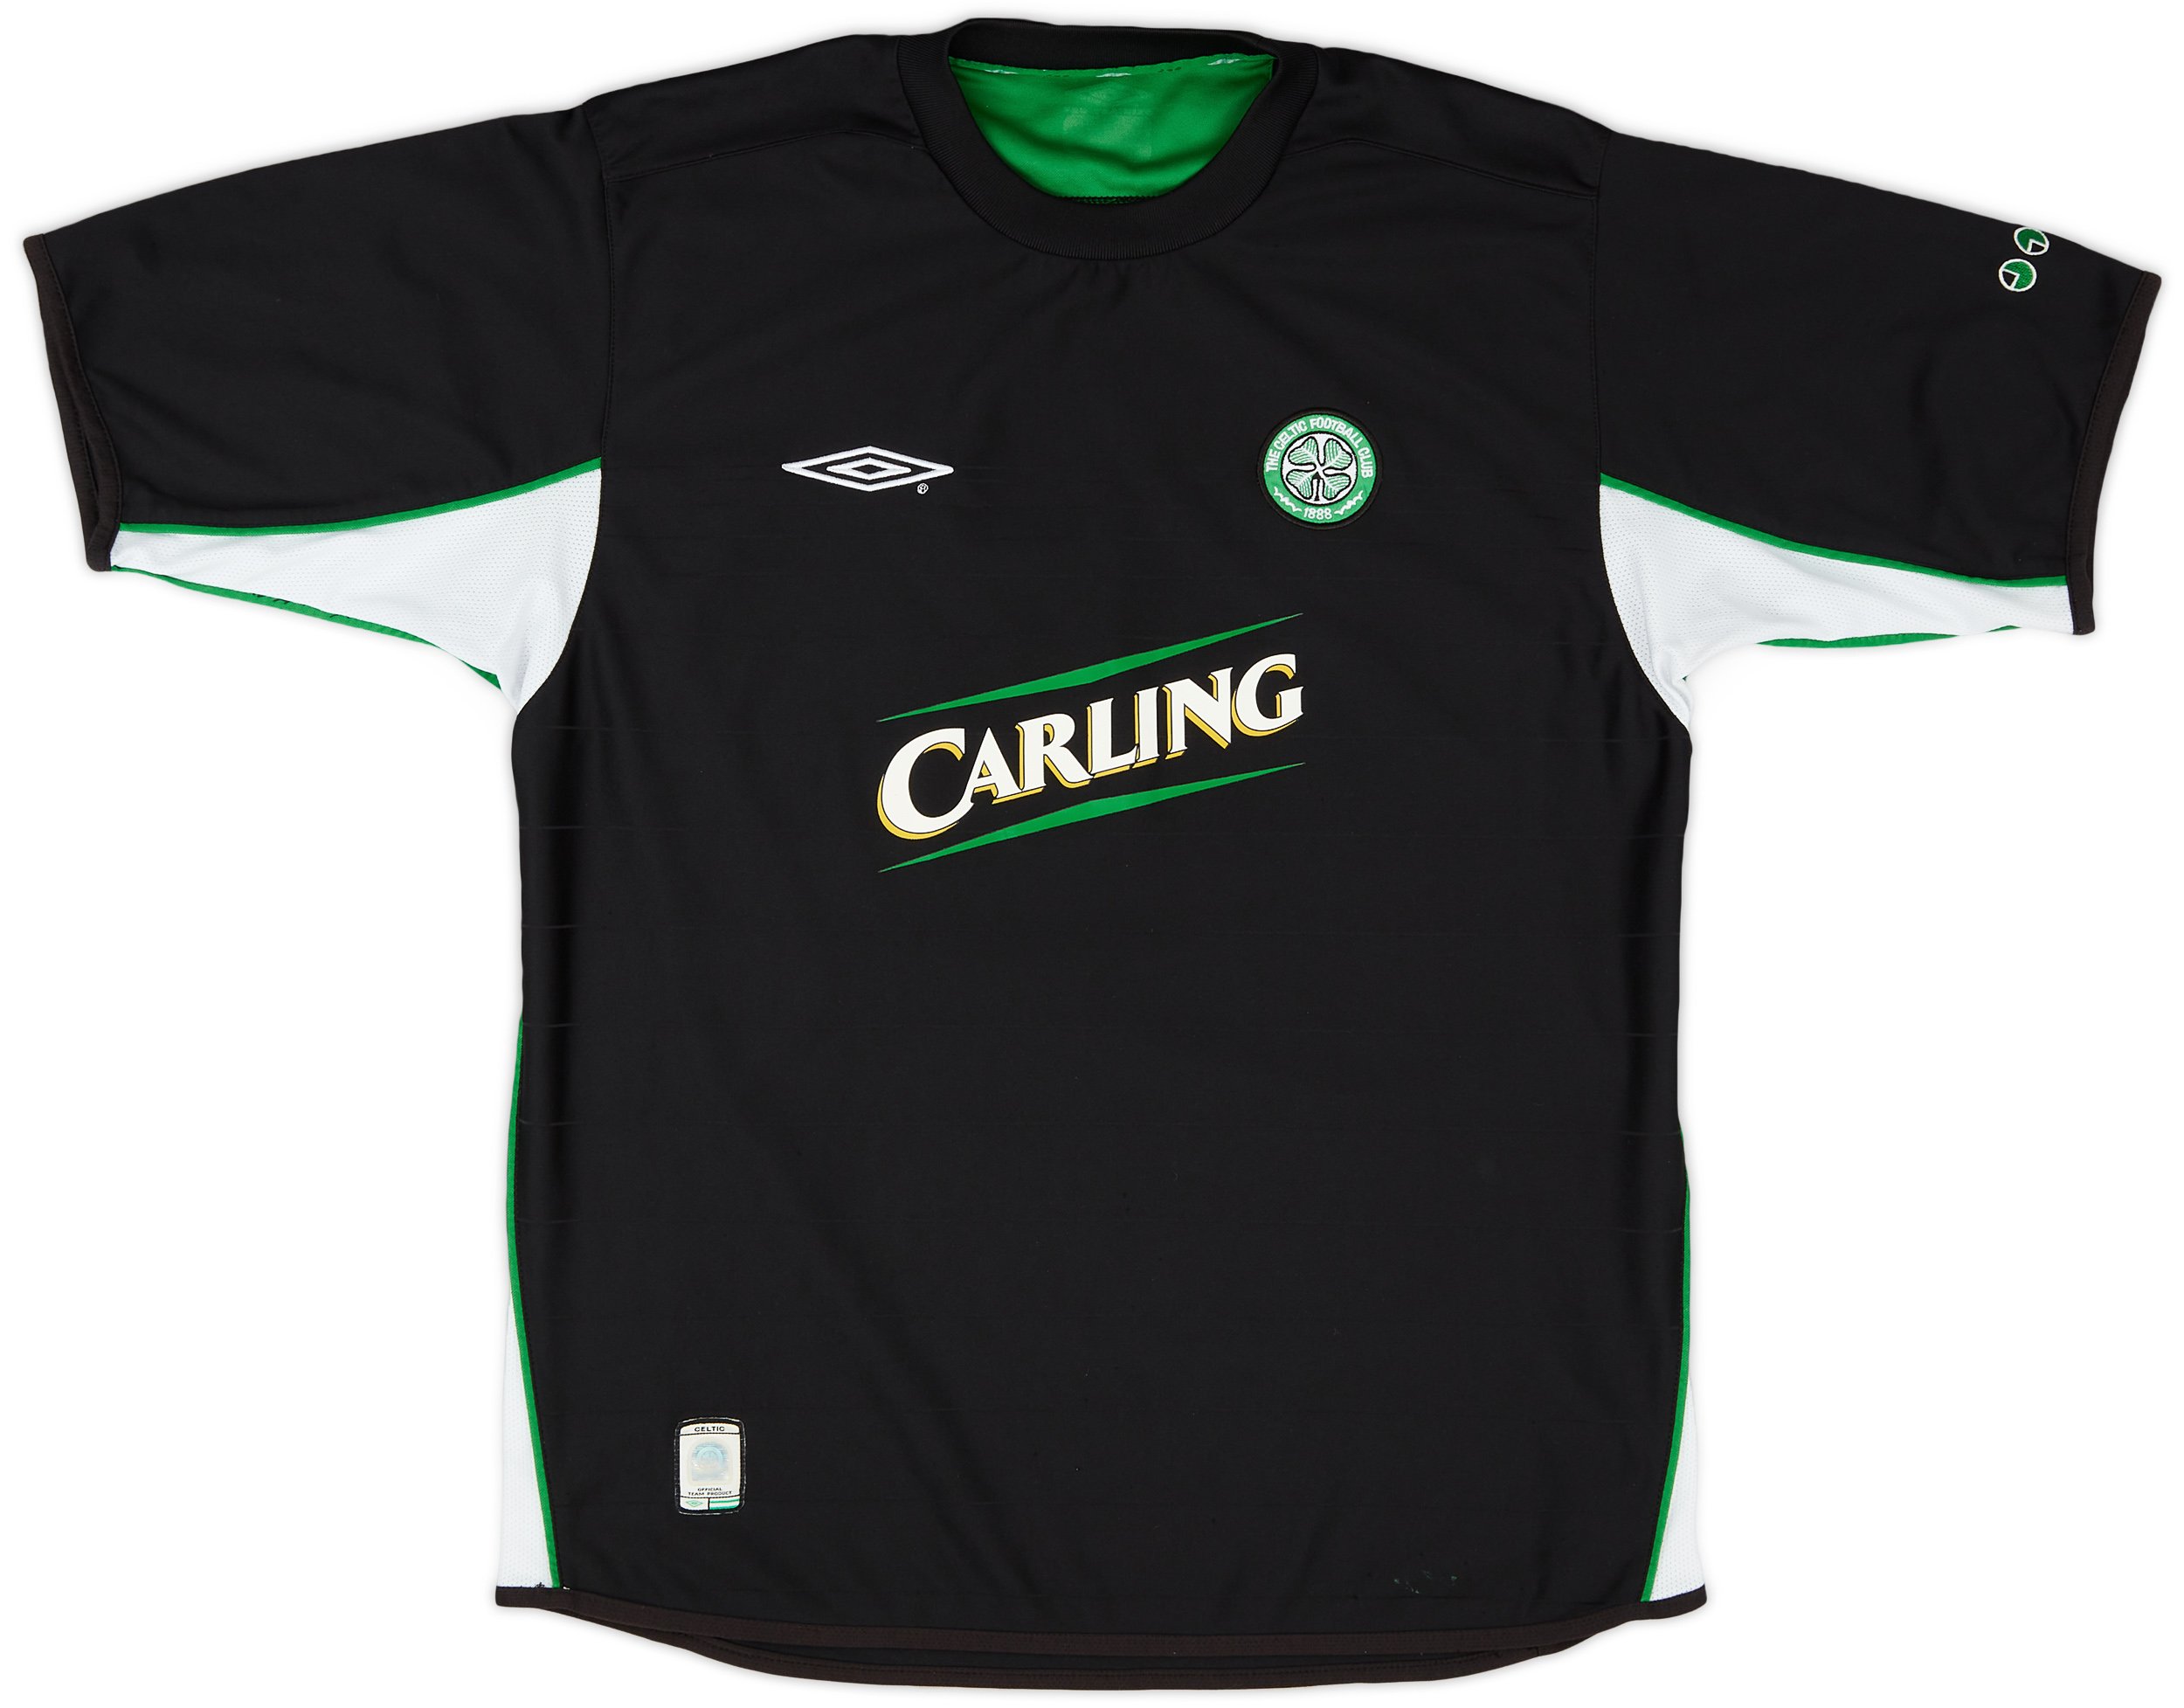 Umbro football shirt Celtic 2003/04 